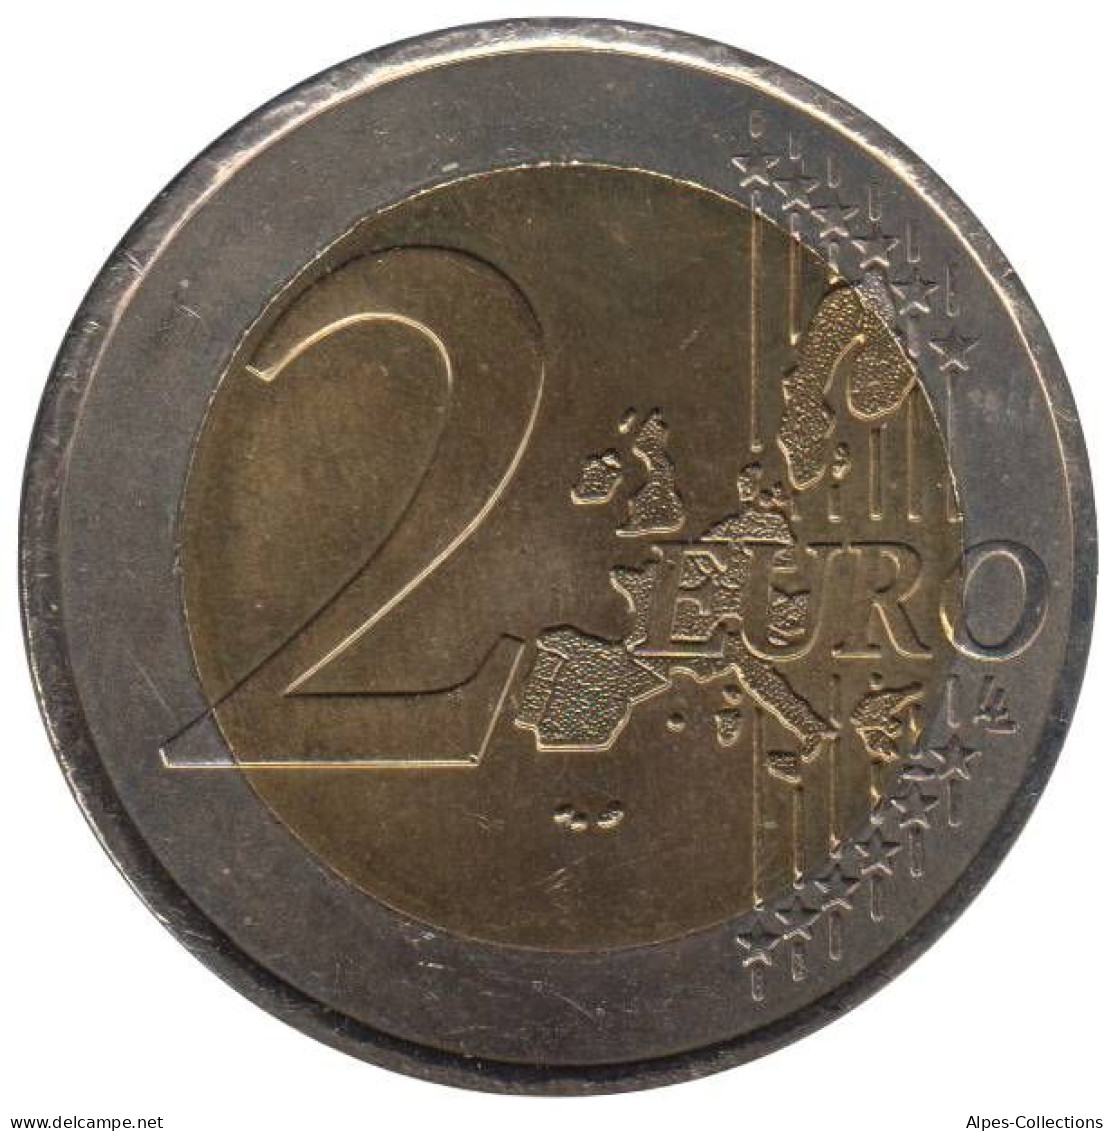 FR20001.1 - FRANCE - 2 Euros - 2001 - France